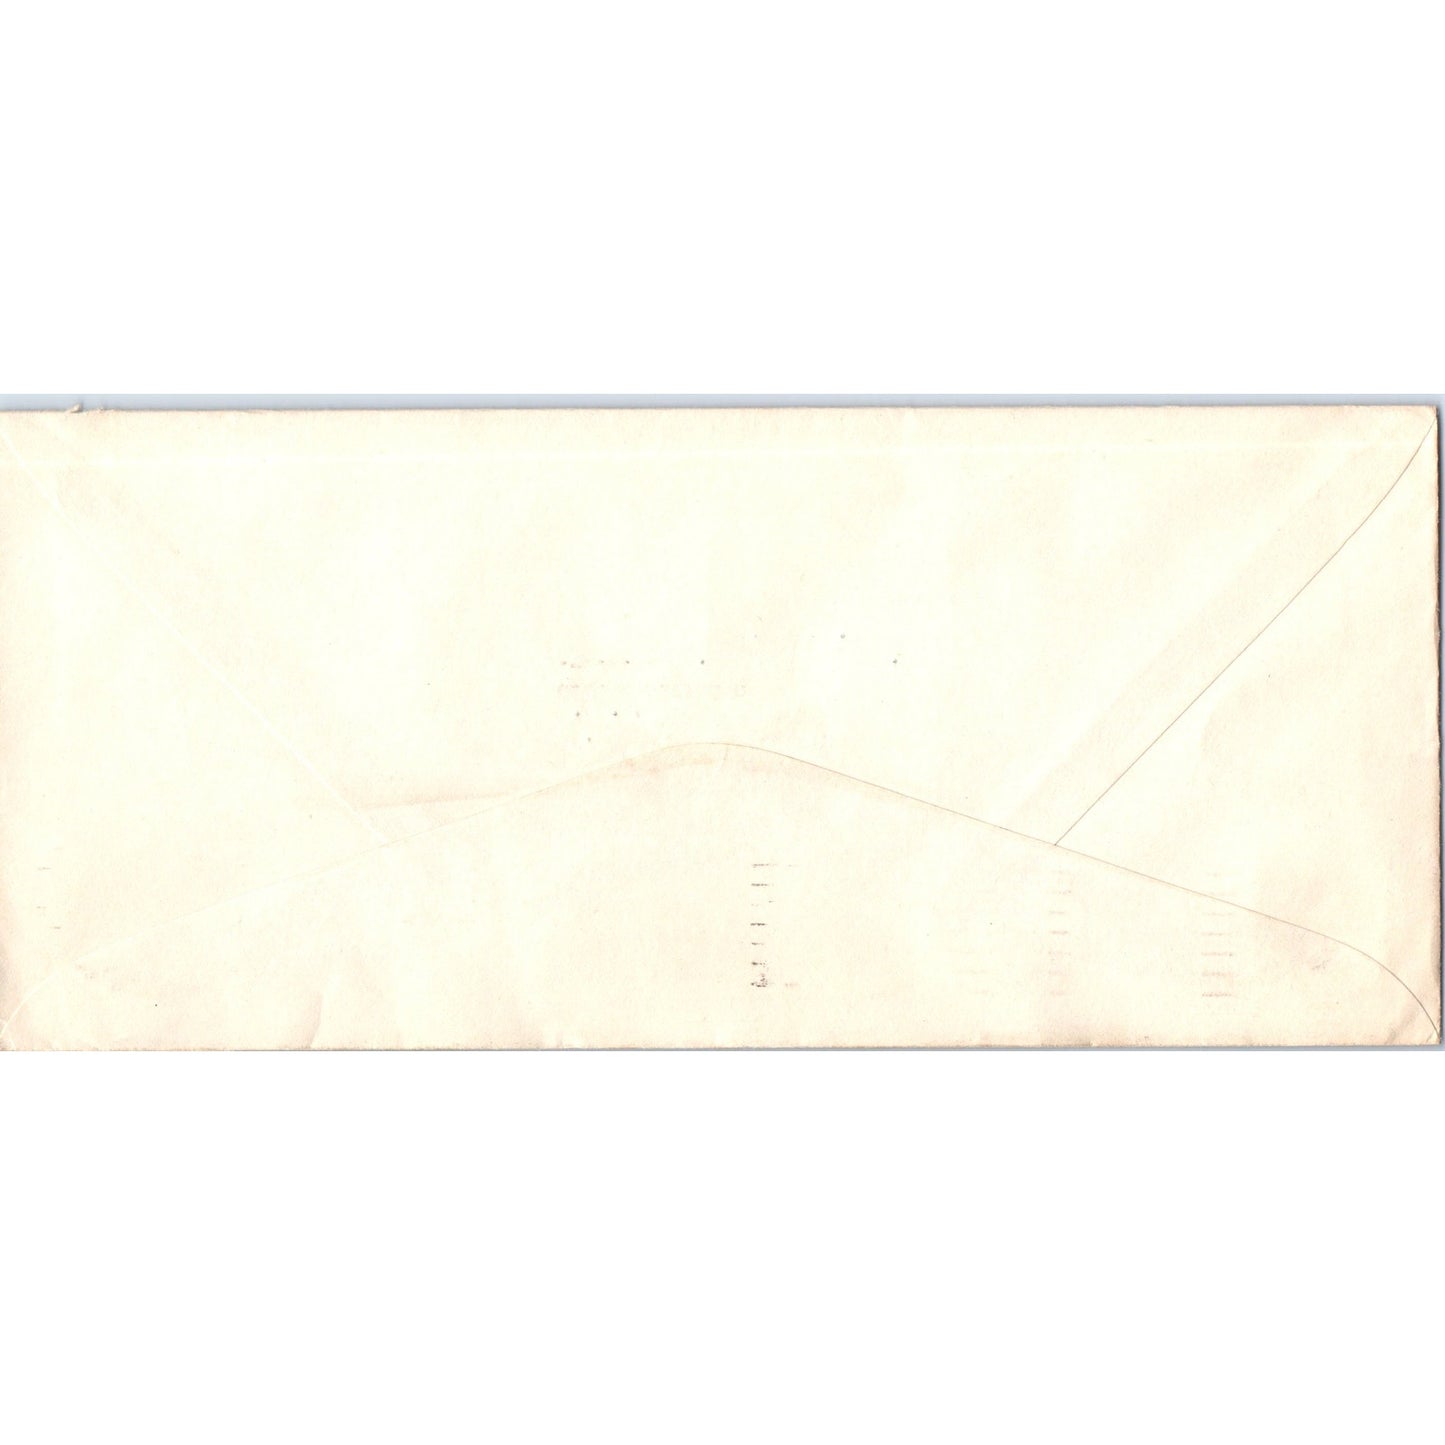 1953 Godfrey L Cabot New Brunswick NJ Postal Cover Envelope TH9-L2